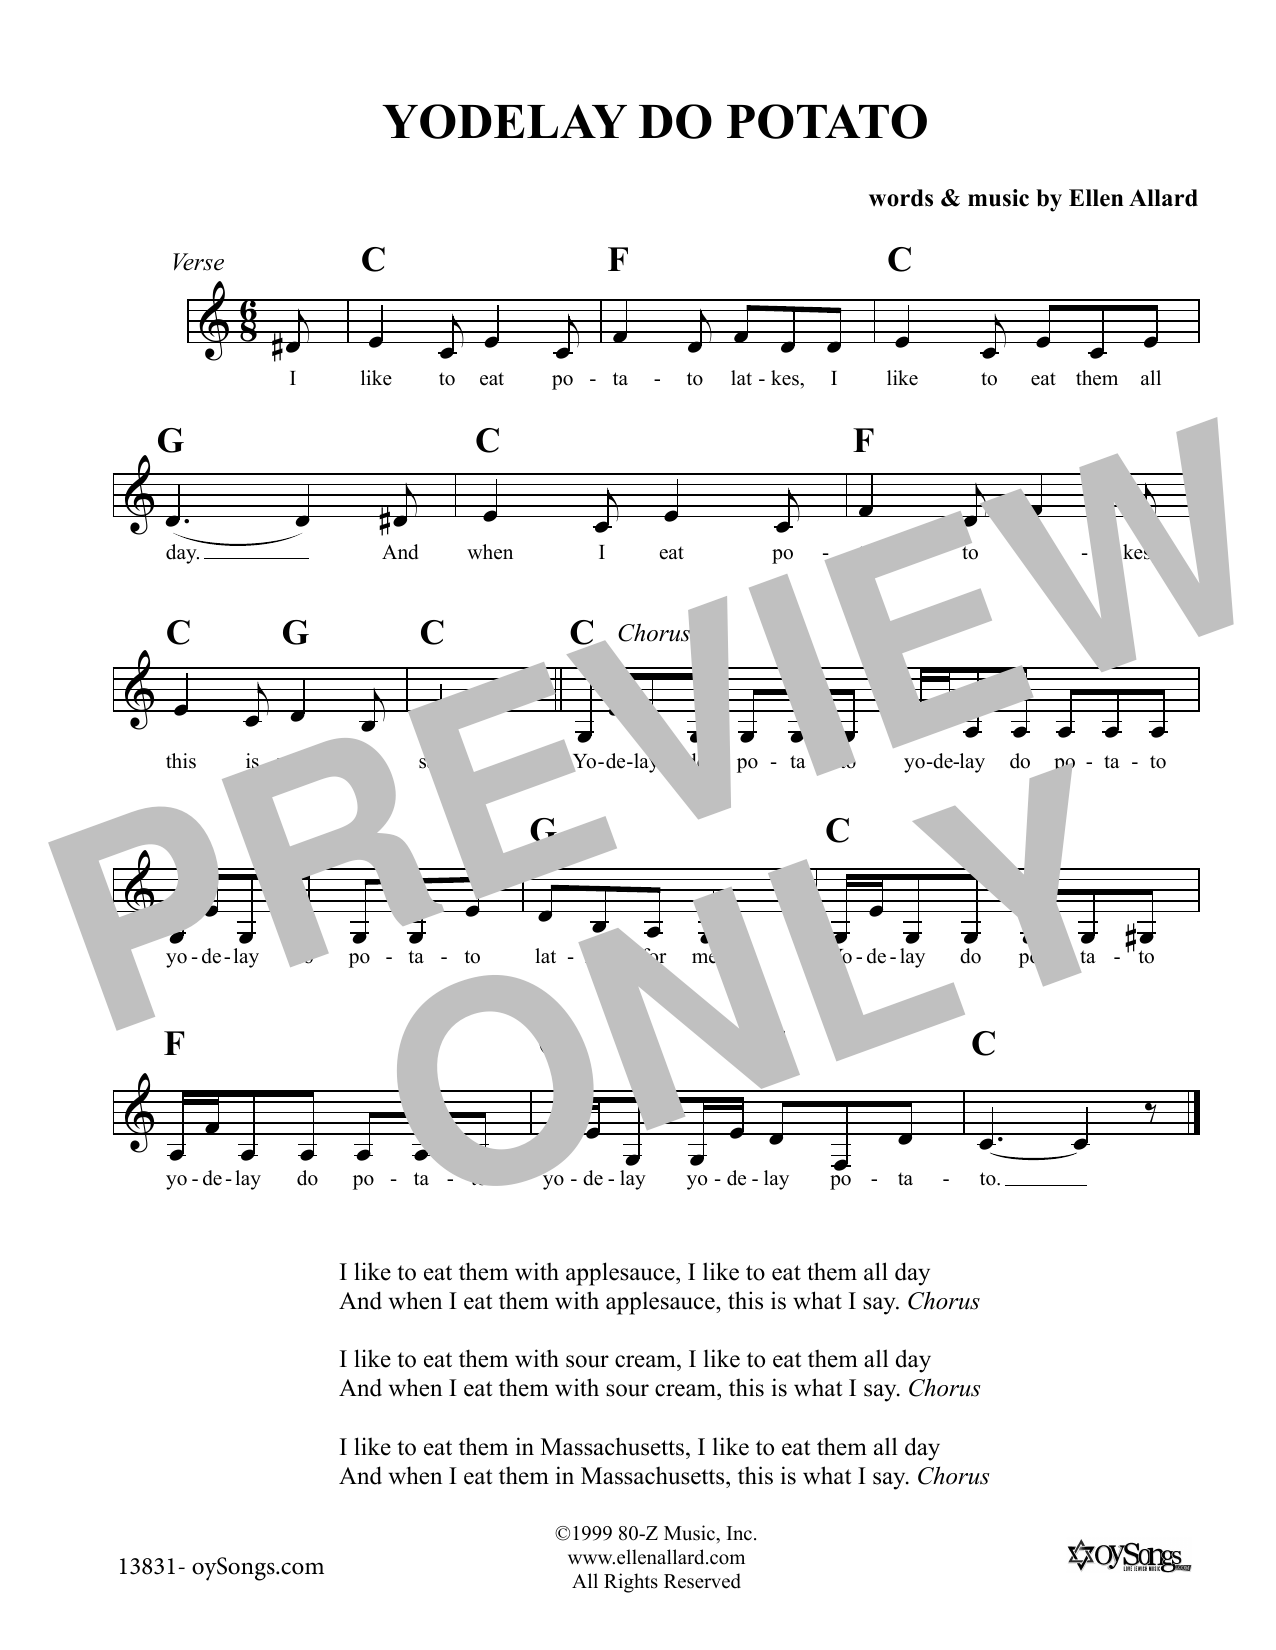 Ellen Allard Yodelay Do Potato sheet music notes and chords. Download Printable PDF.